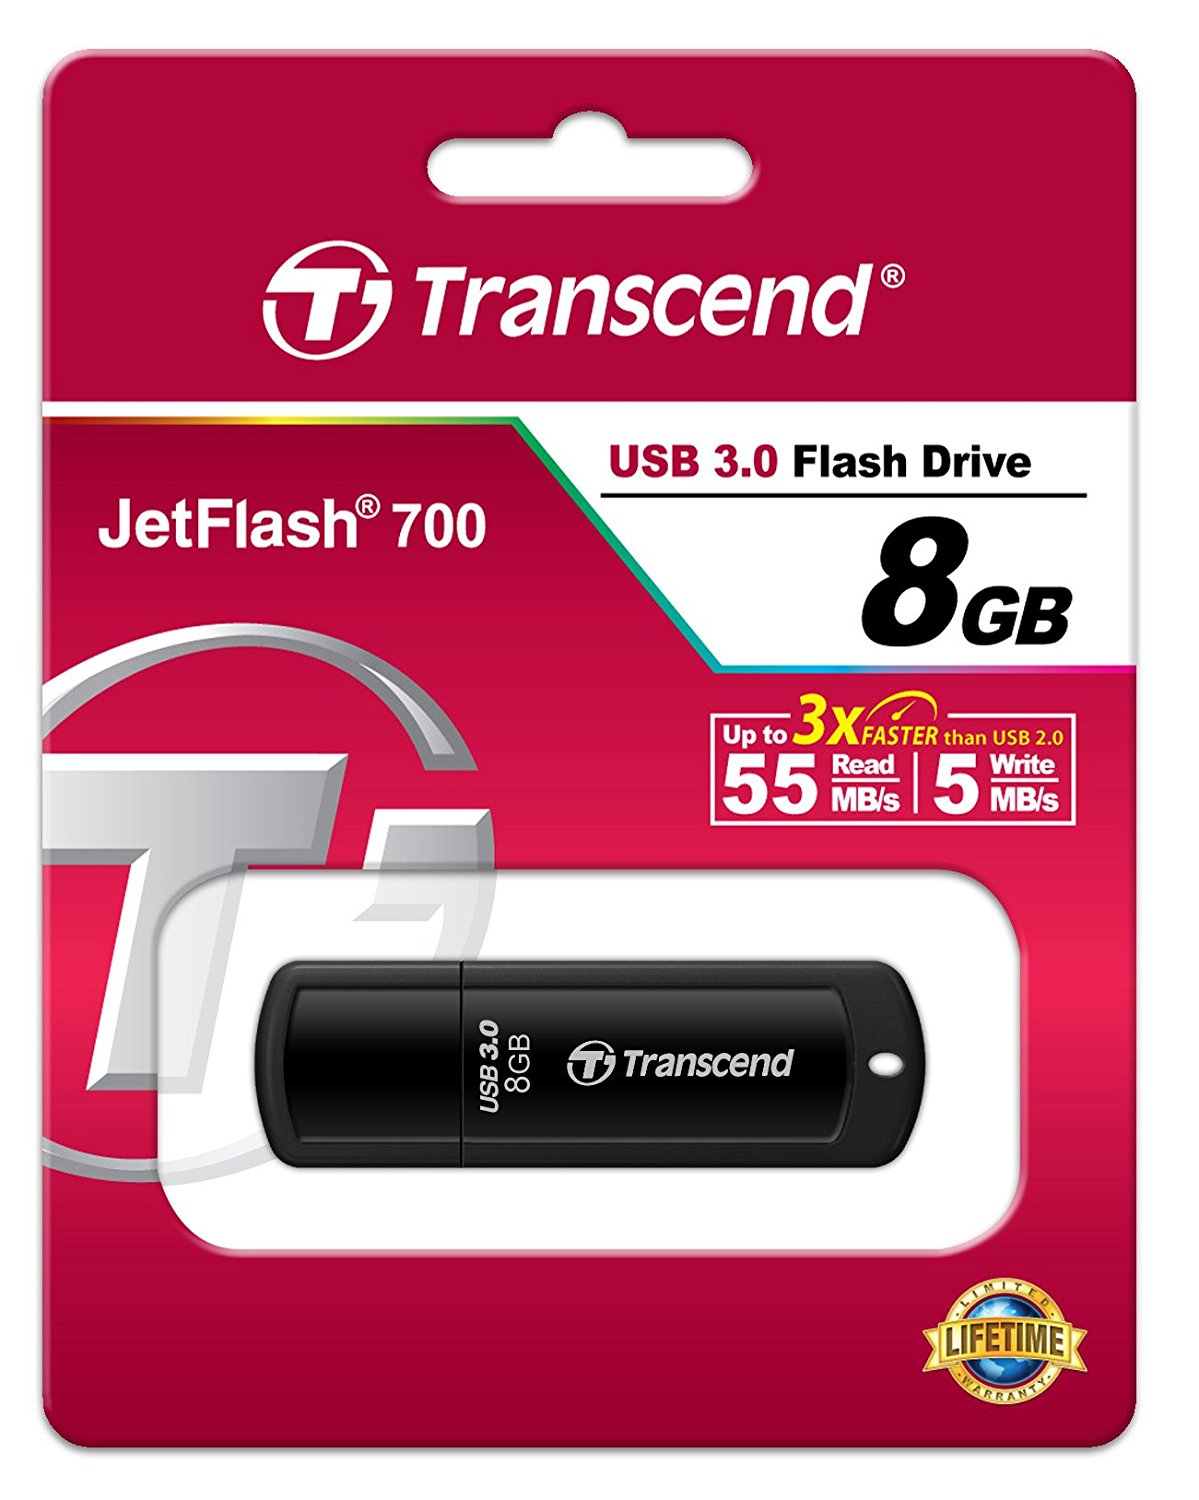 Transcend-8GB-Model-700-USB-3-0